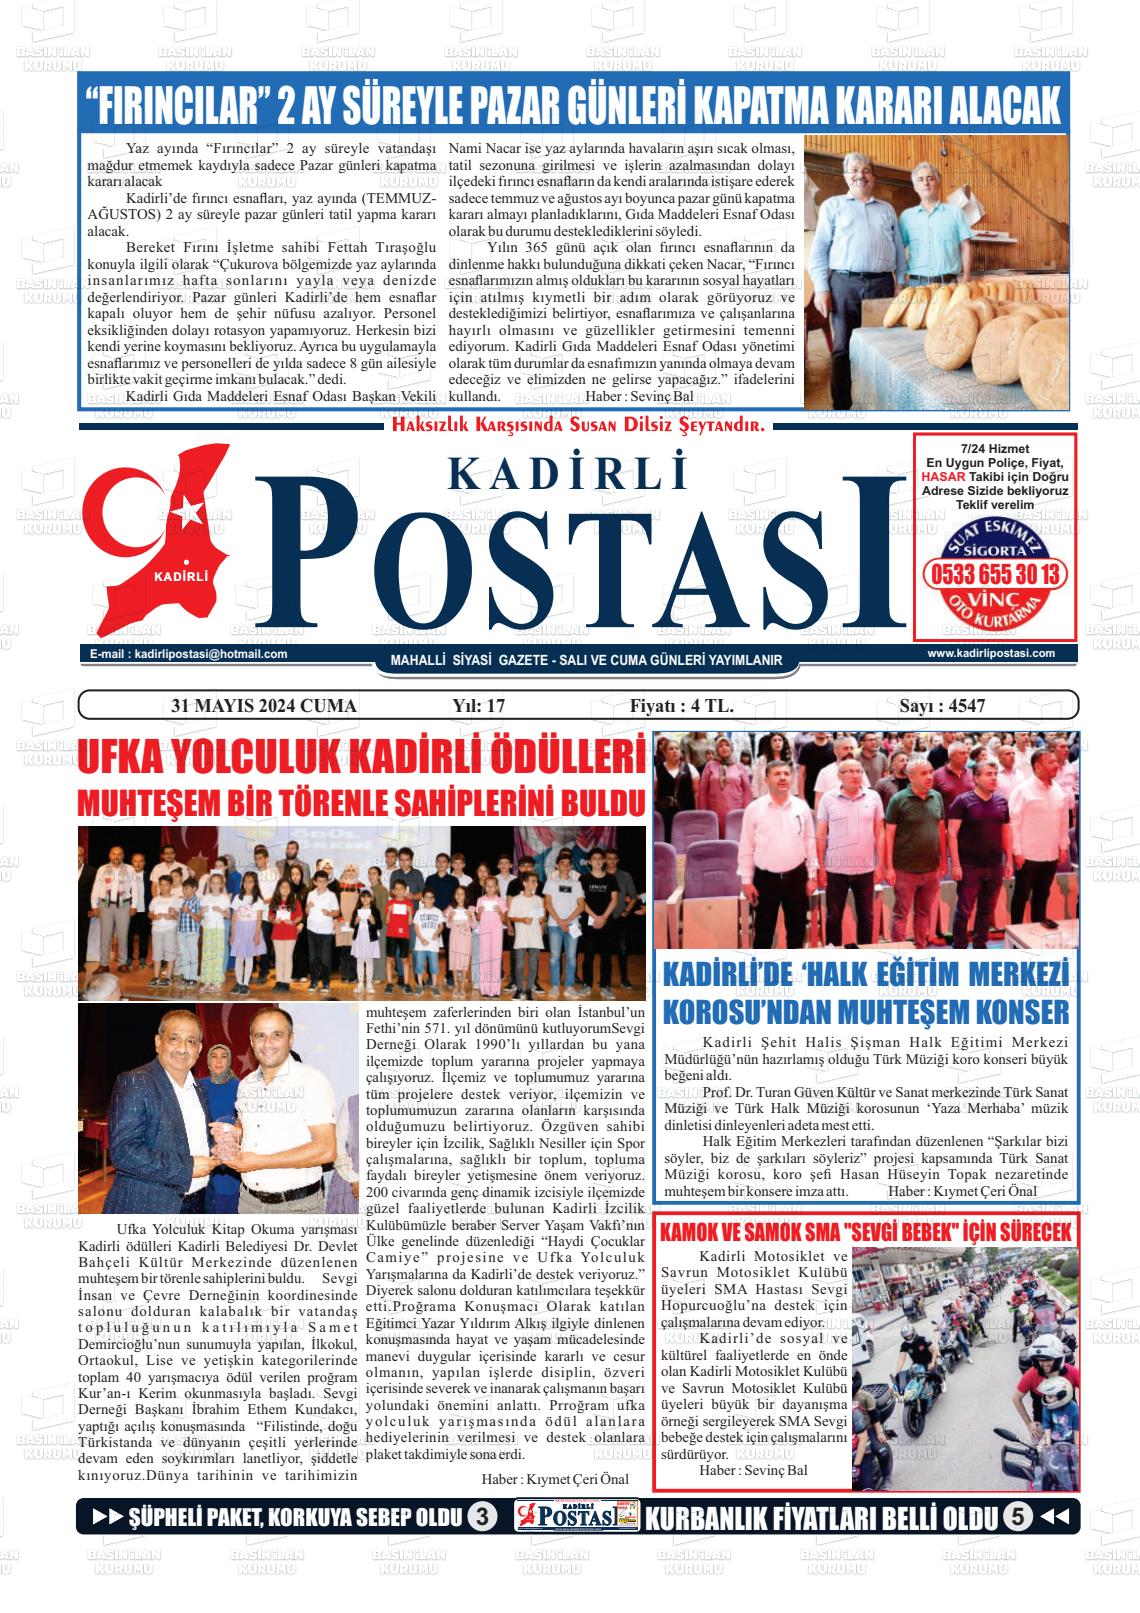 KADİRLİ POSTASI Gazetesi